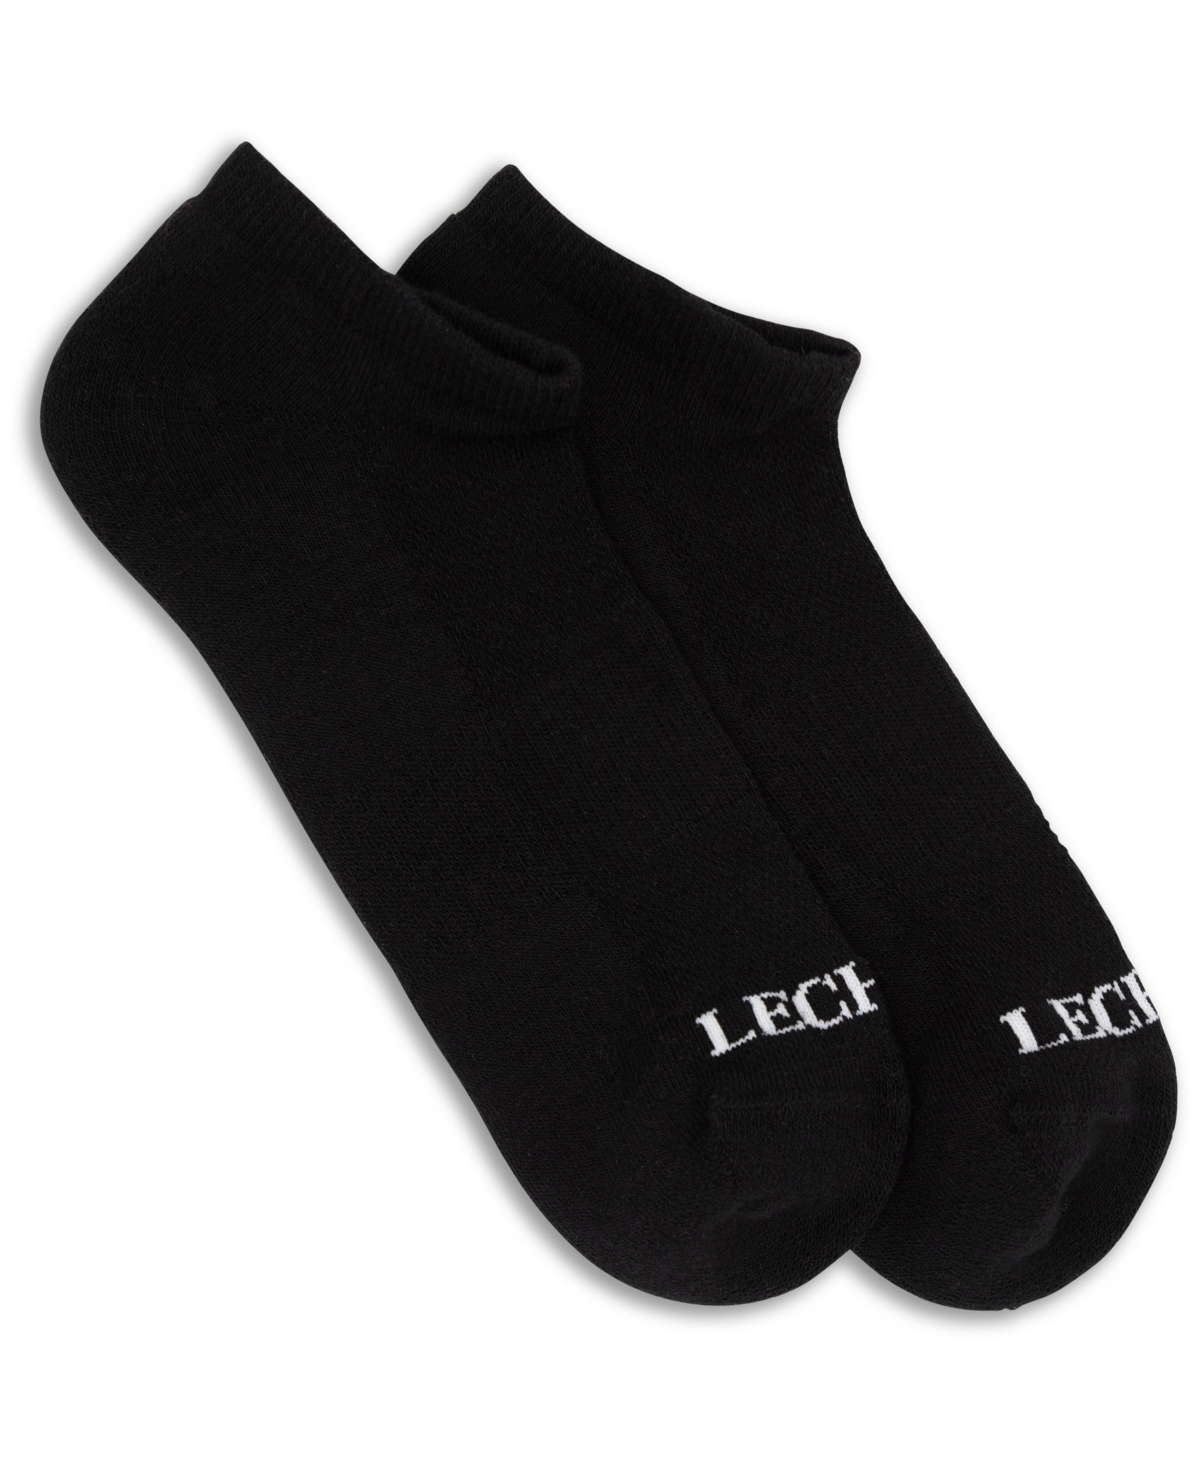 Unisex European Made Low-Cut Socks - Black